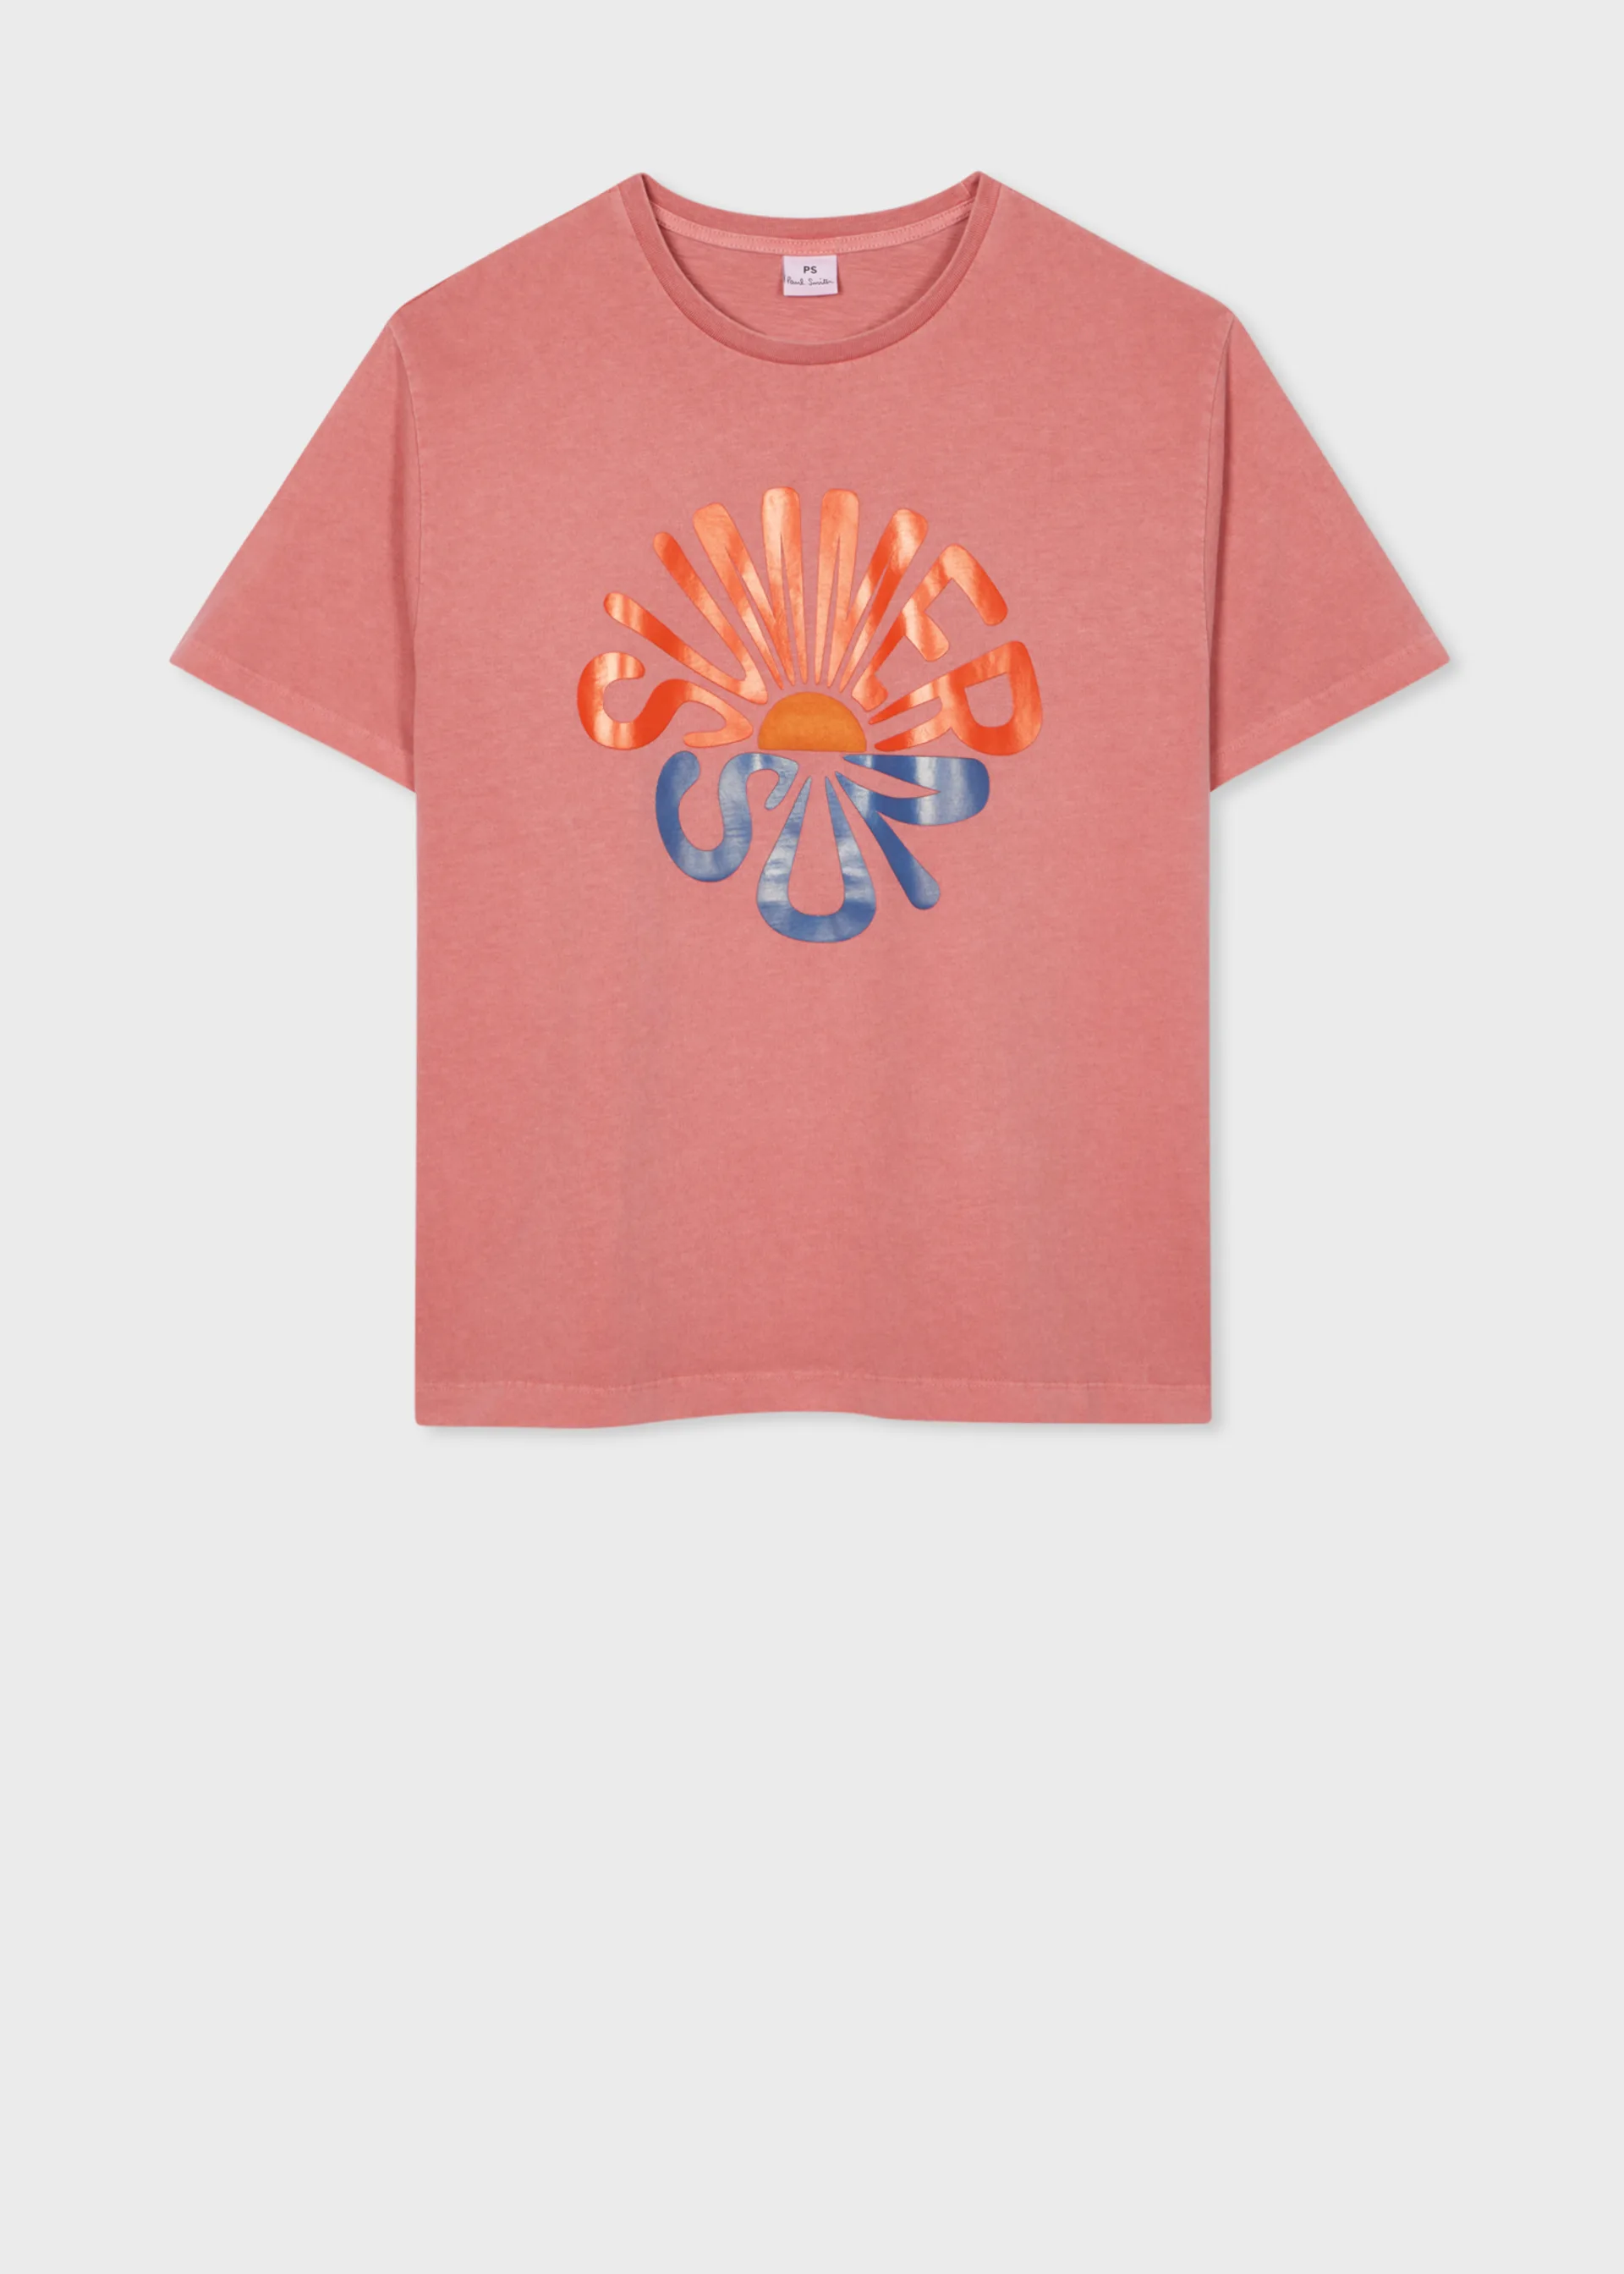 paul-smith-summer-sun-printed-womens-t-shirt